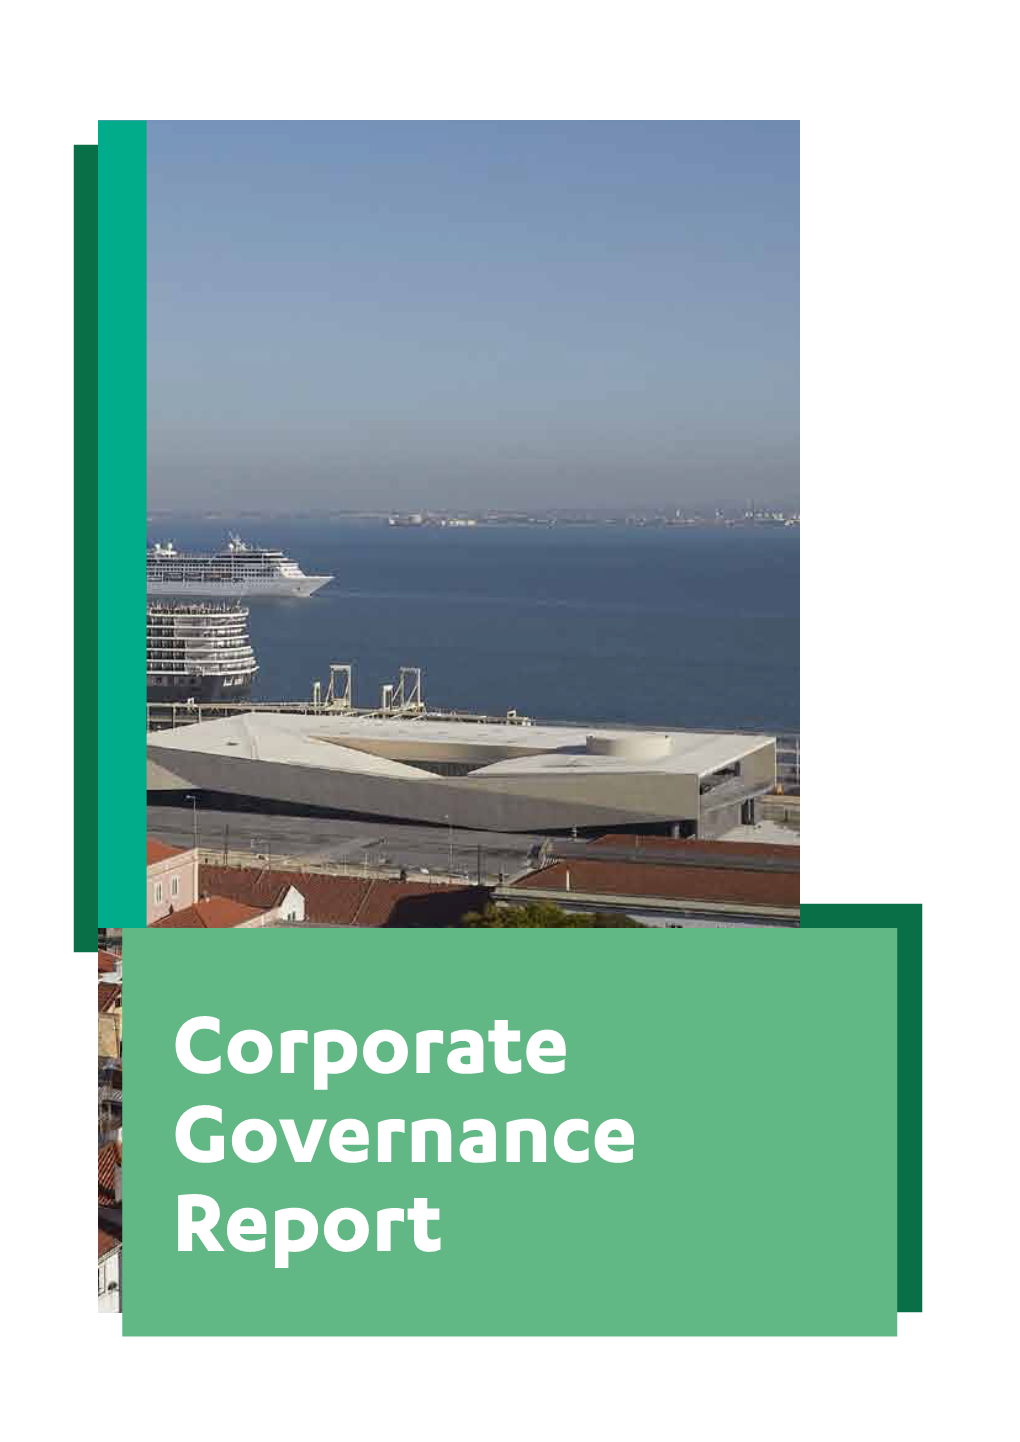 Corporate Governance Report 03 Corporate Governance Report INTRODUCTION CORPORATE GOVERNANCE